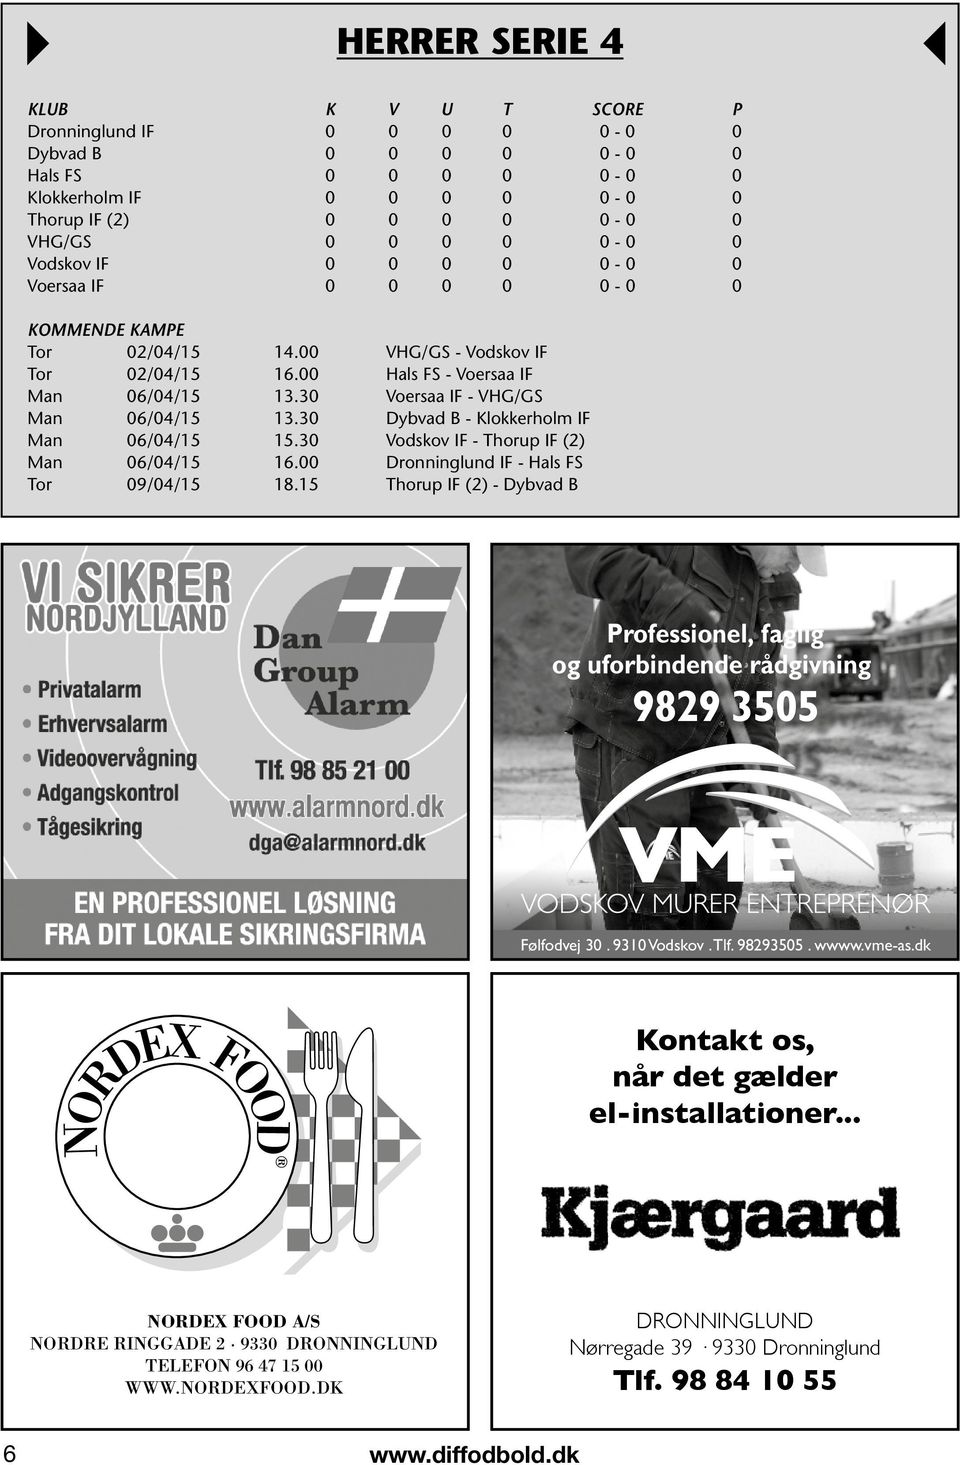 30 Dybvad B - Klokkerholm IF Man 06/04/15 15.30 Vodskov IF - Thorup IF (2) Man 06/04/15 16.00 Dronninglund IF - Hals FS Tor 09/04/15 18.